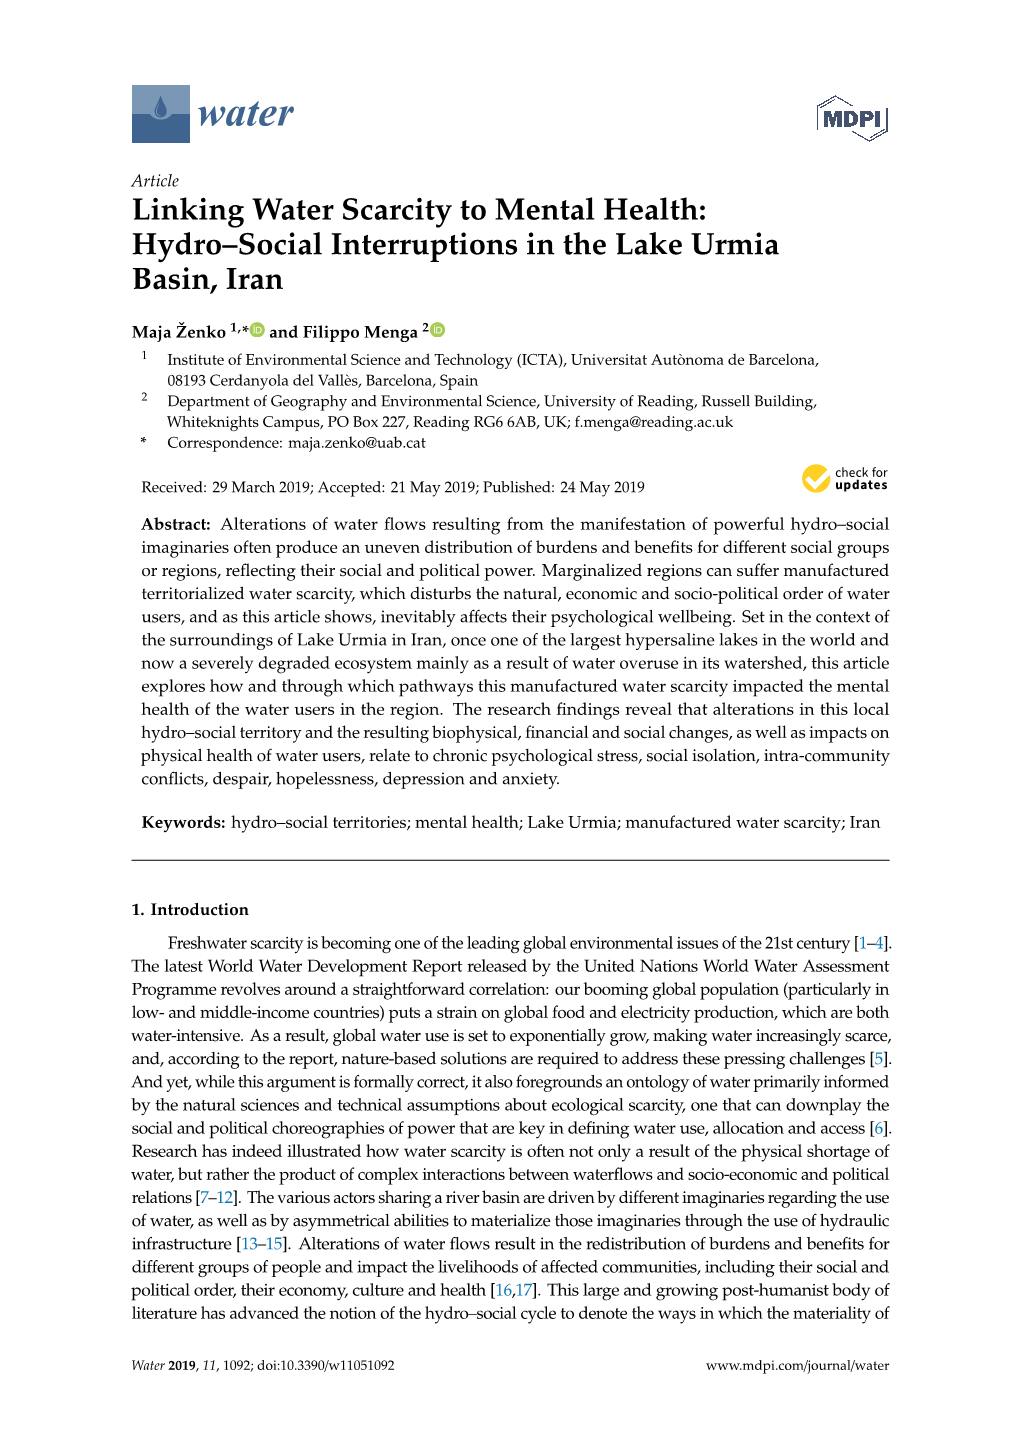 Linking Water Scarcity to Mental Health: Hydro–Social Interruptions in the Lake Urmia Basin, Iran